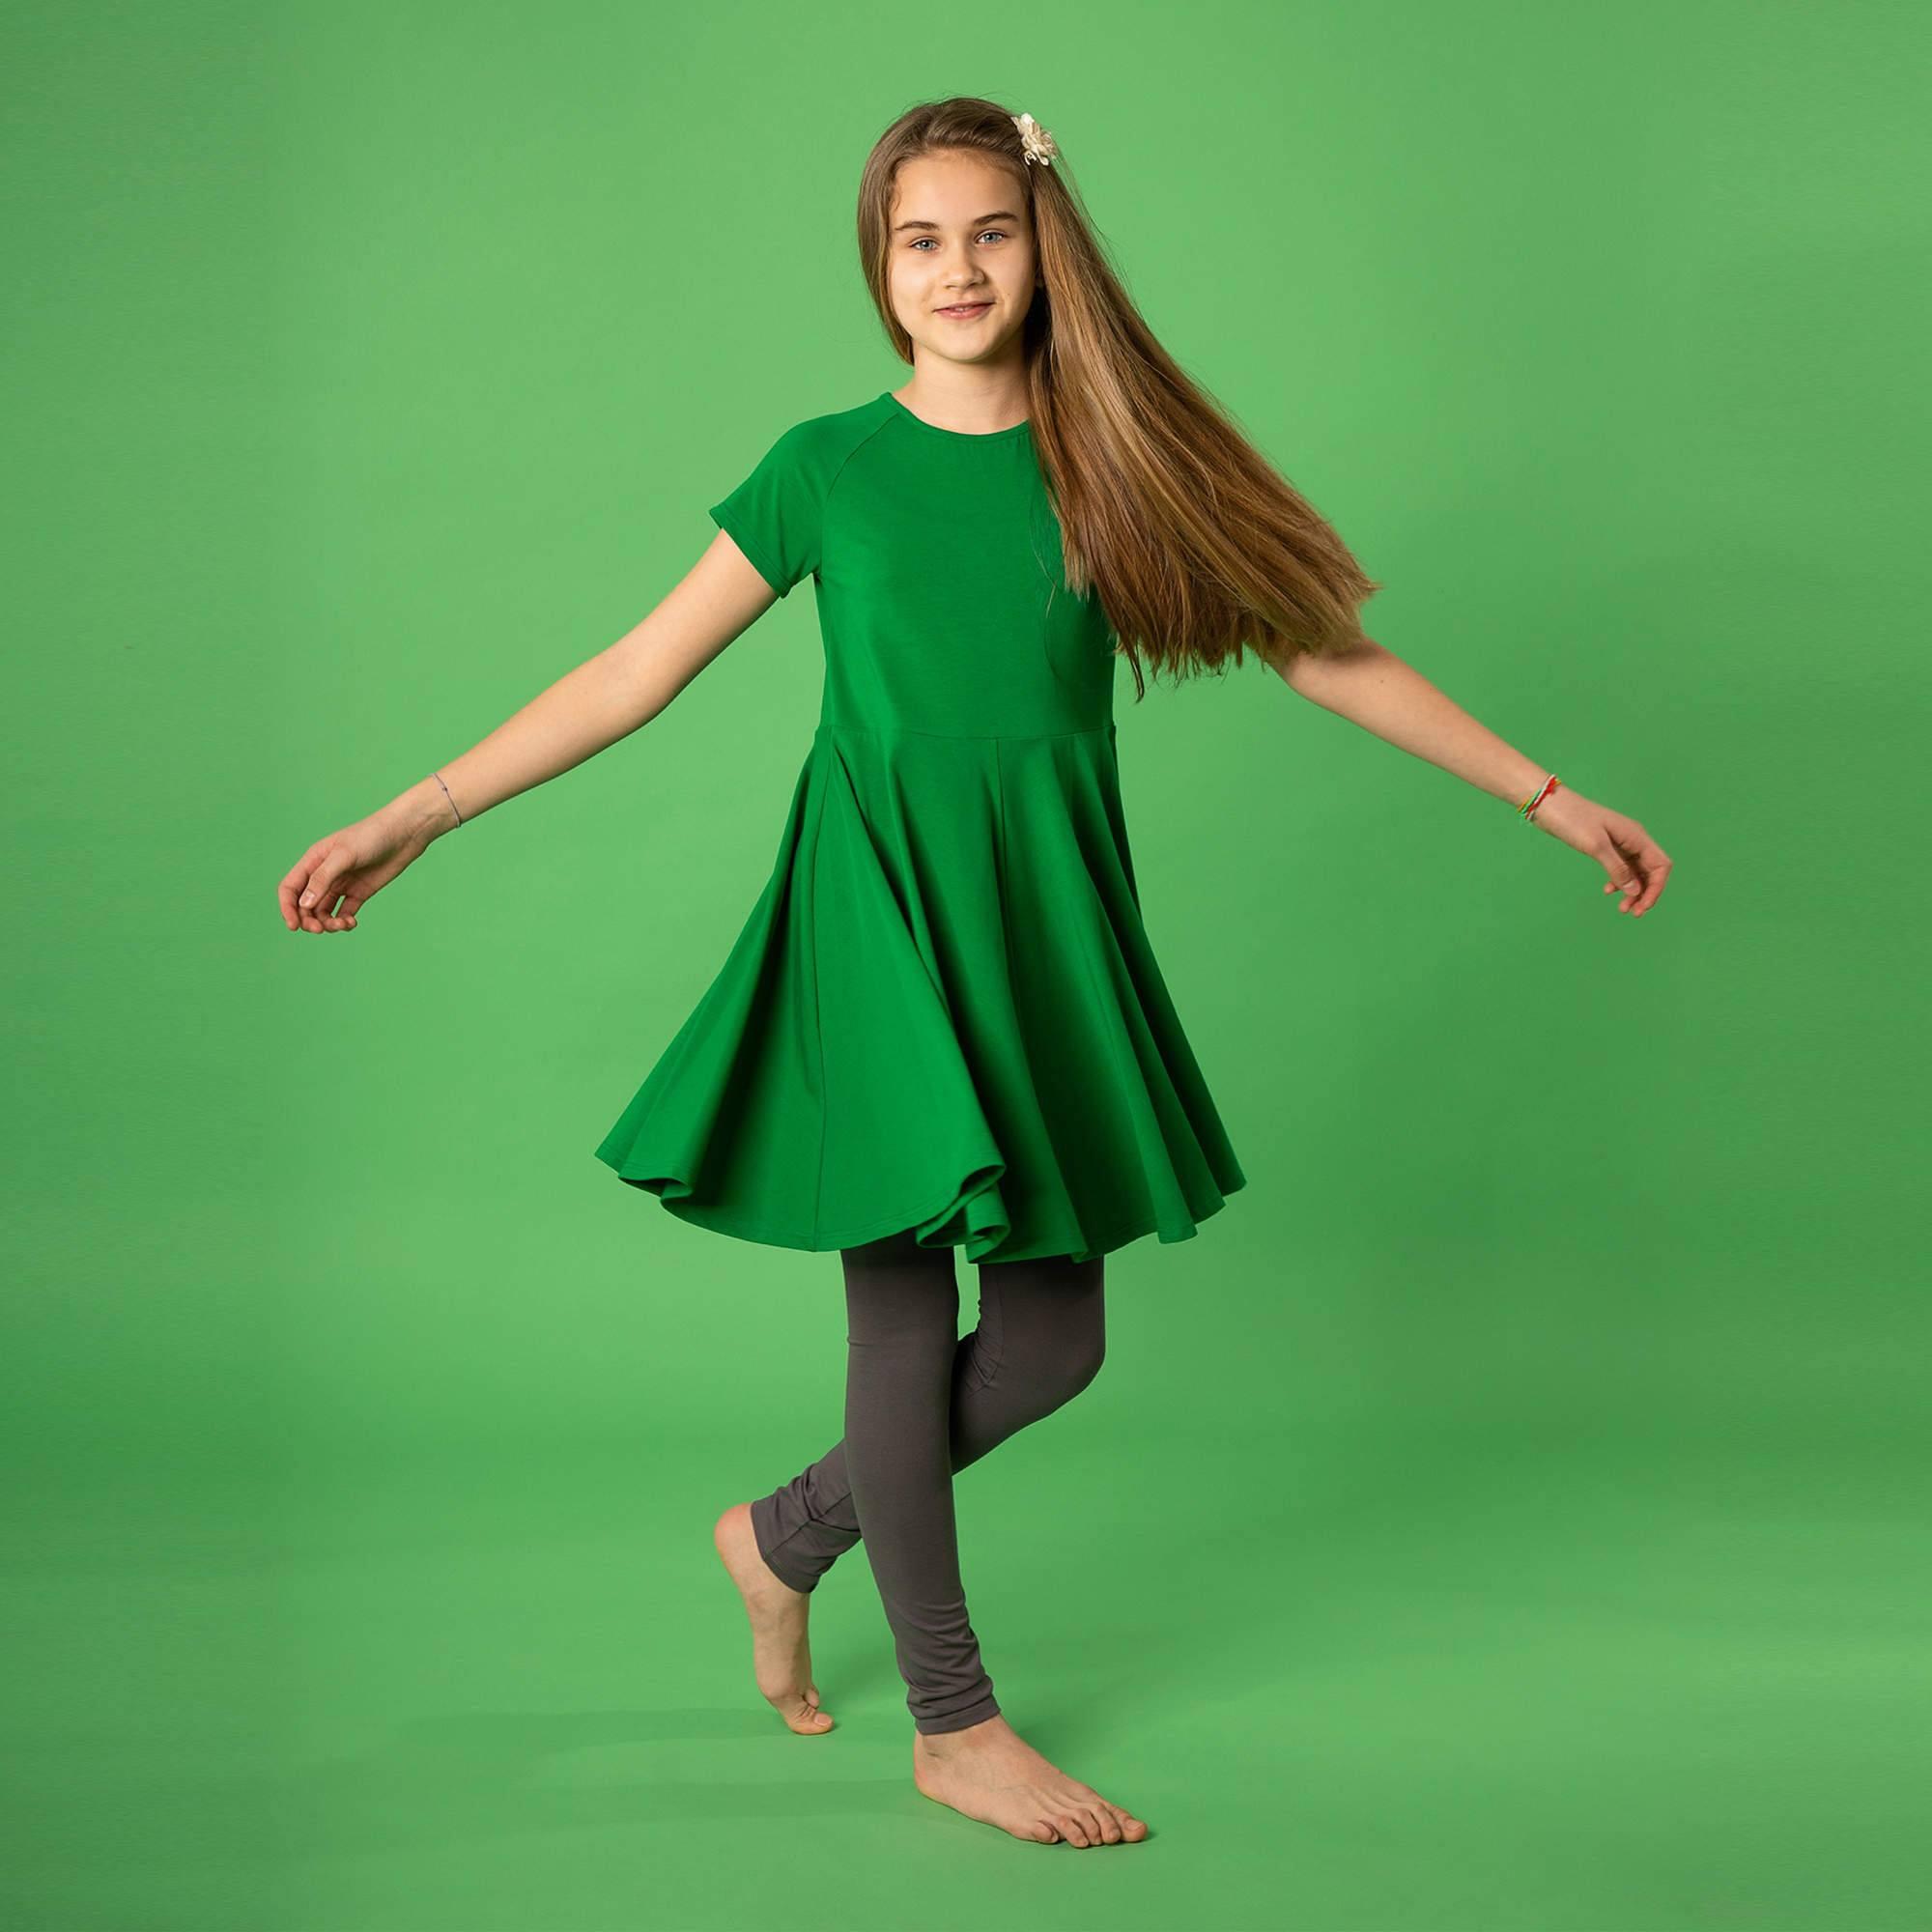 Zielona sukienka z krótkim rękawem Junior